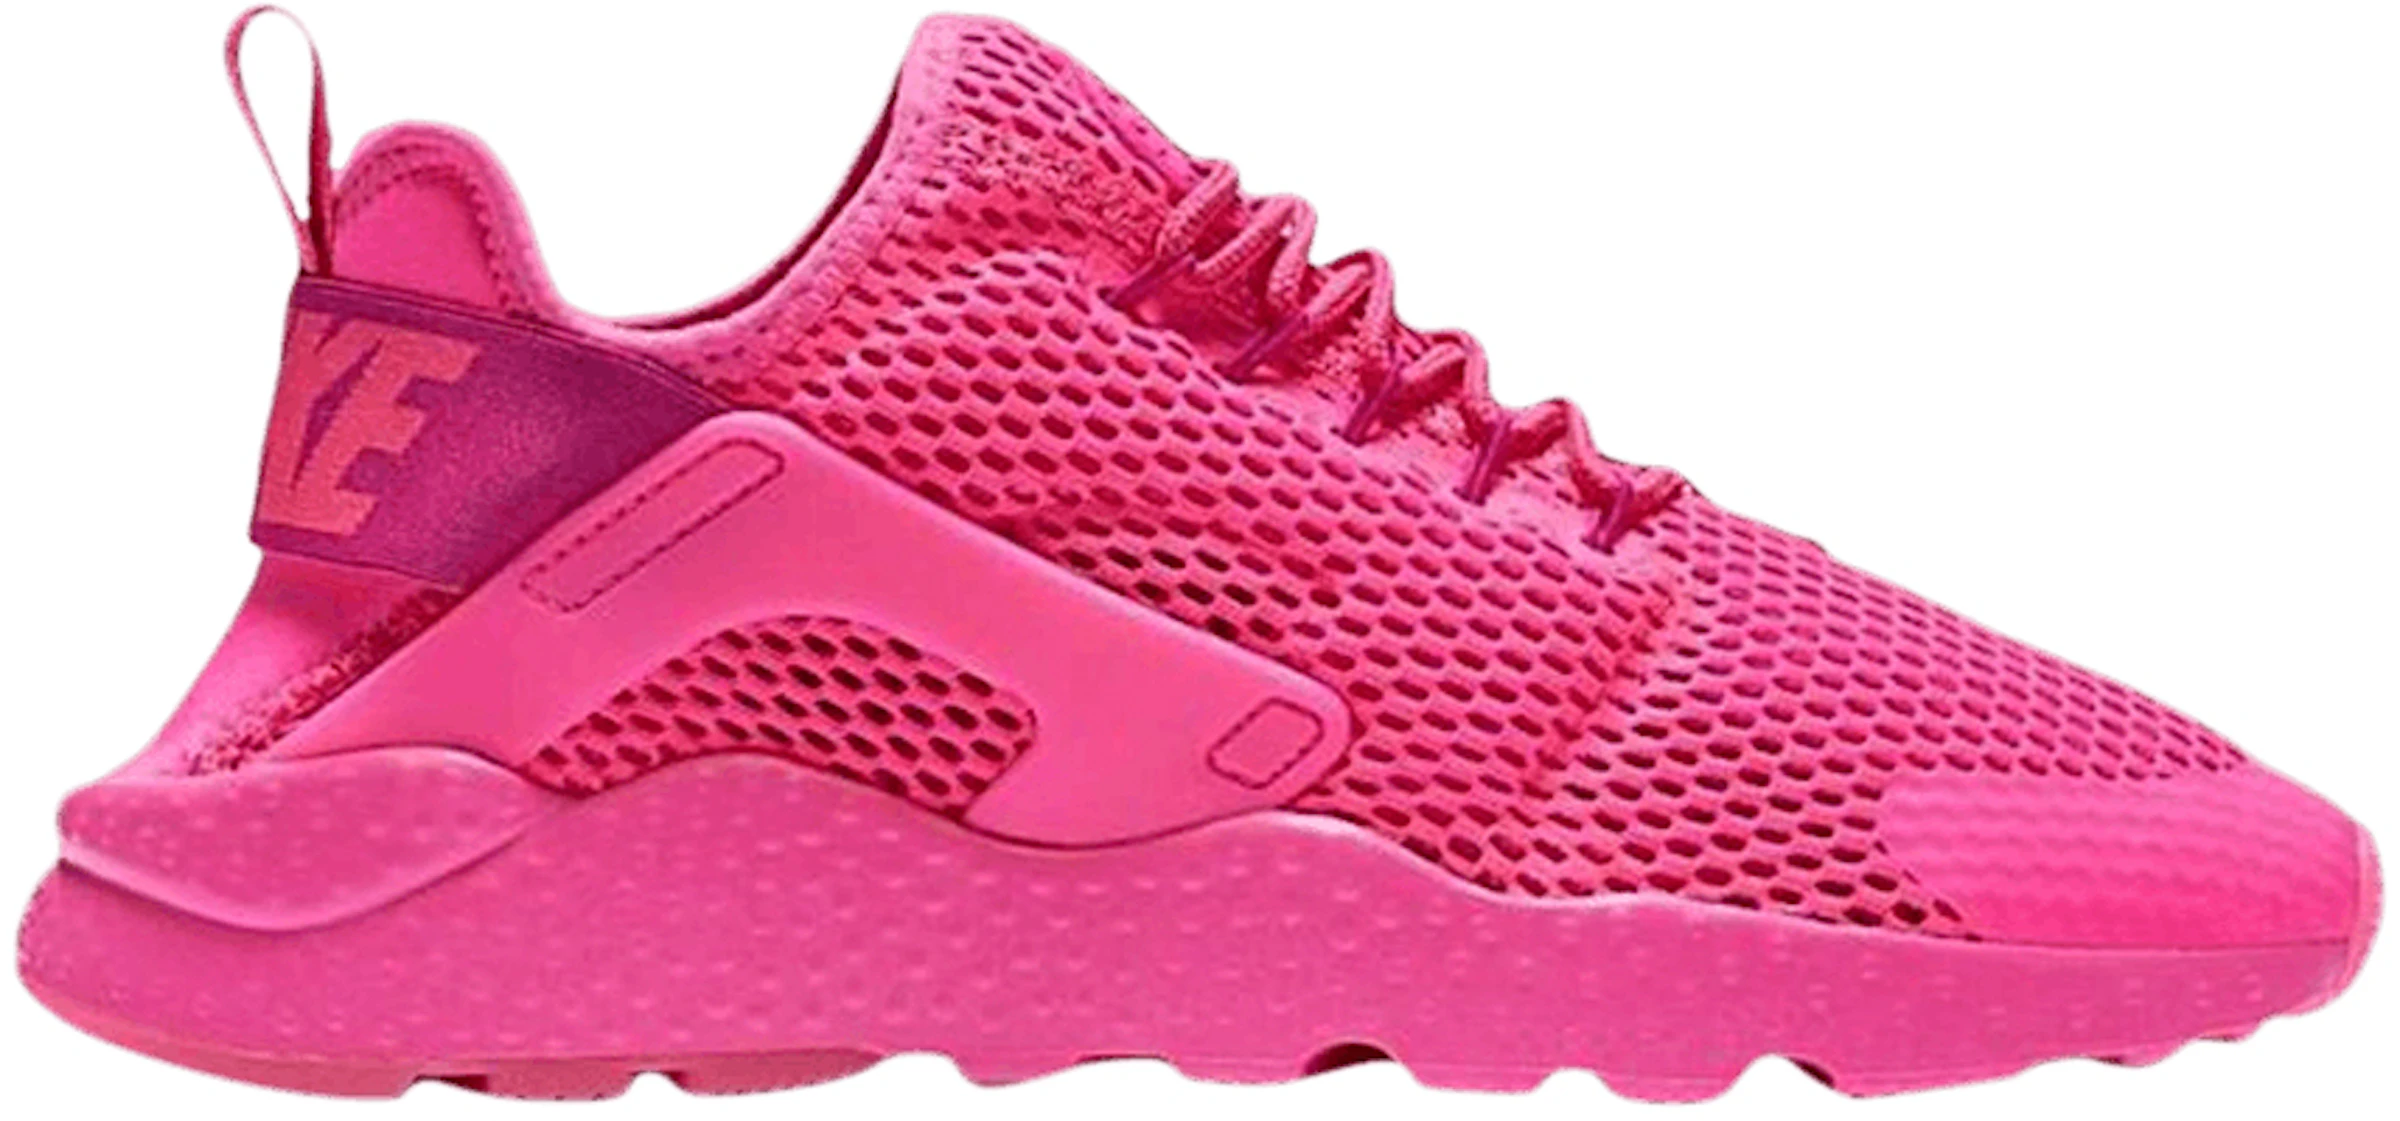 indruk lens Tektonisch Nike Air Huarache Run Ultra Breathe Pink Blast (Women's) - 833292-600 - US